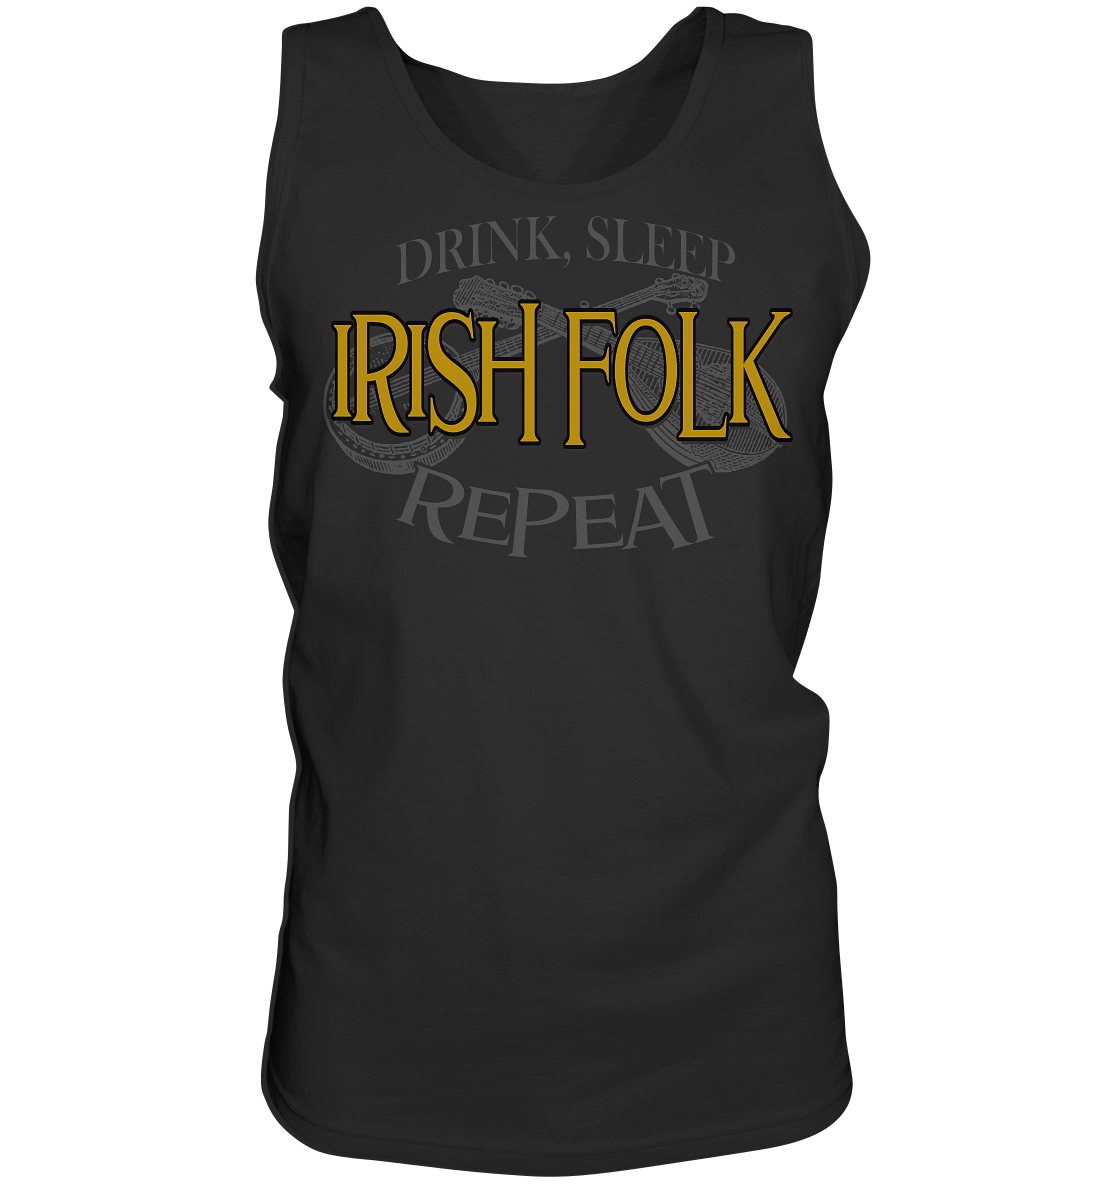 Drink, Sleep "Irish Folk" Repeat - Tank-Top